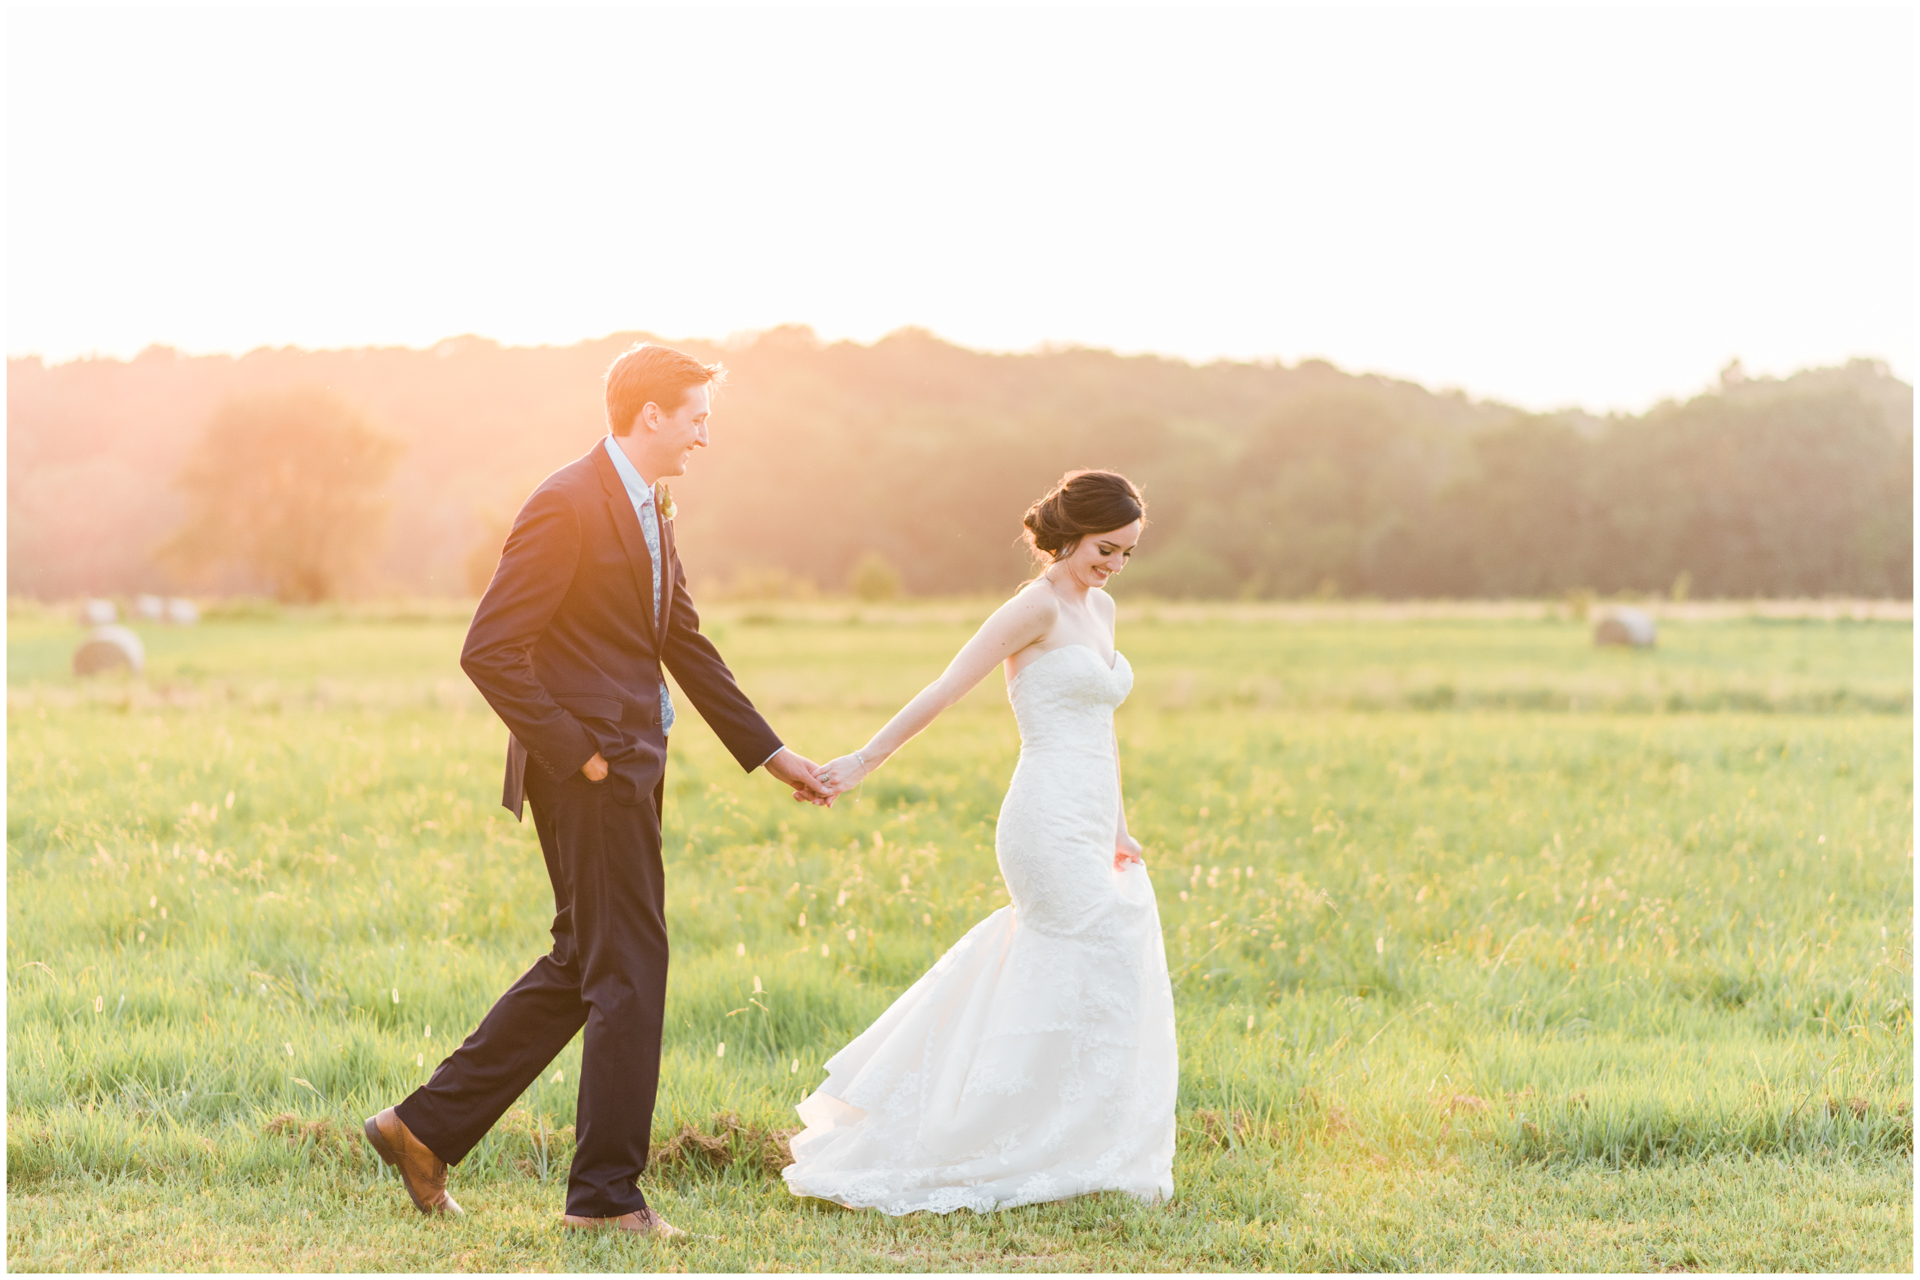  Harvest Hollow Venue and Farm Wedding - Huntsville Alabama Wedding Photography - Golden Hour